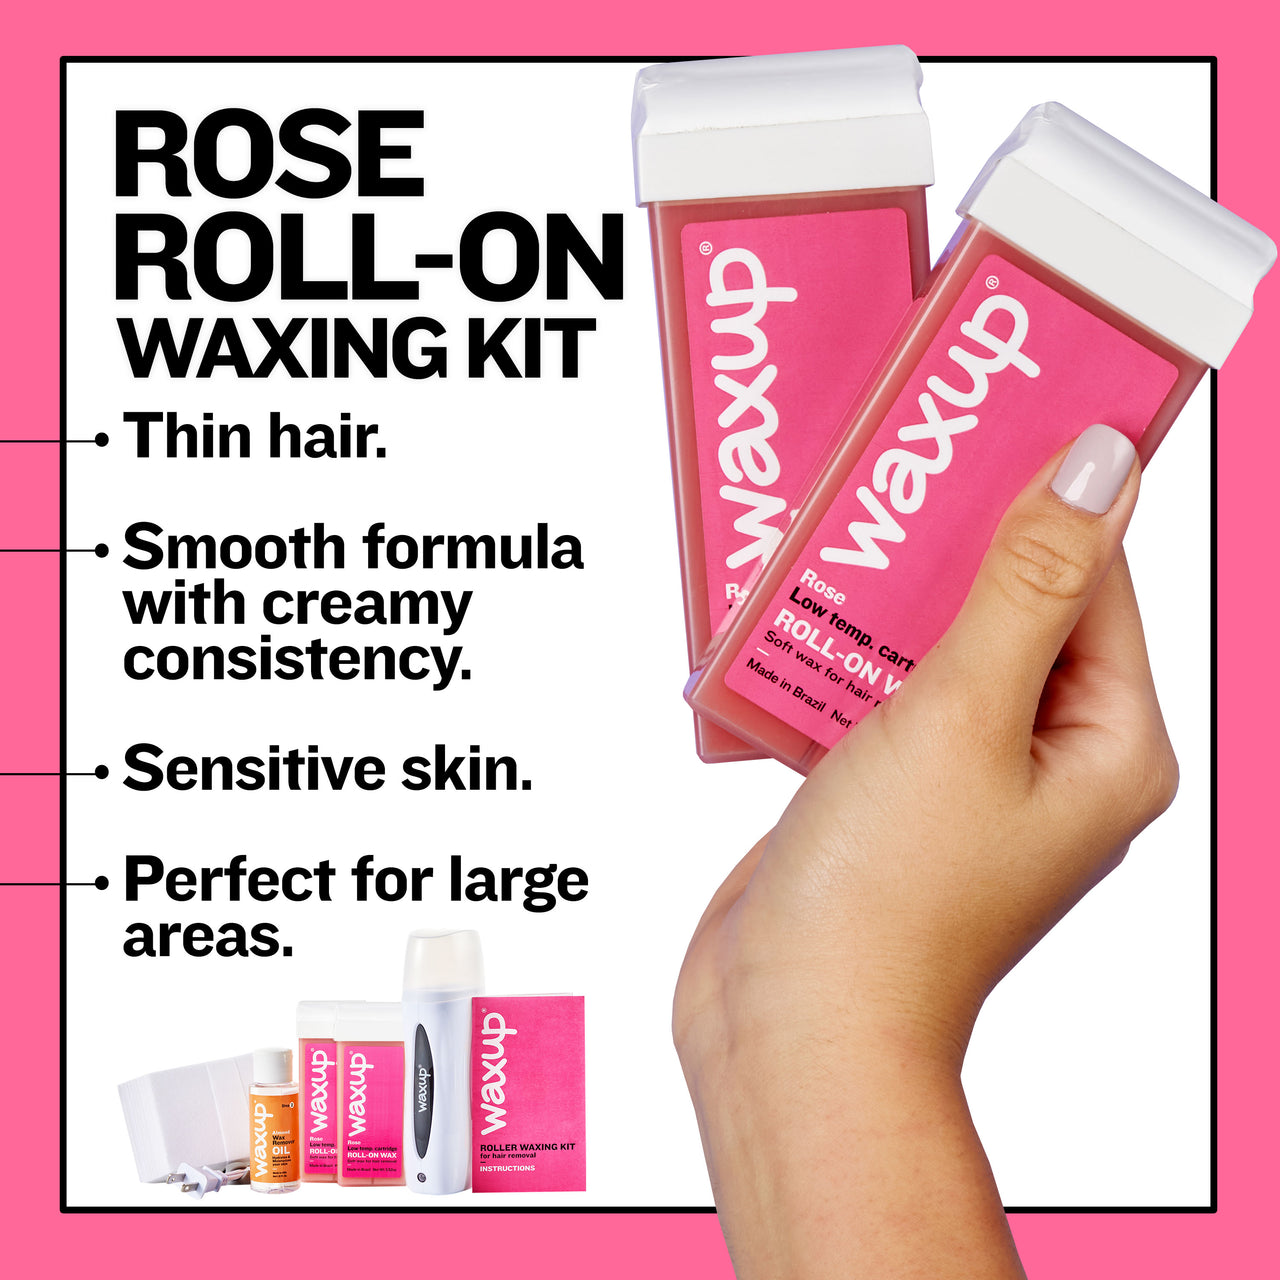 Rose Roller Waxing Kit - thatswaxup -  - Roller Waxing Kit - waxup hair removal wax body waxing kit women and men professional waxing supplies